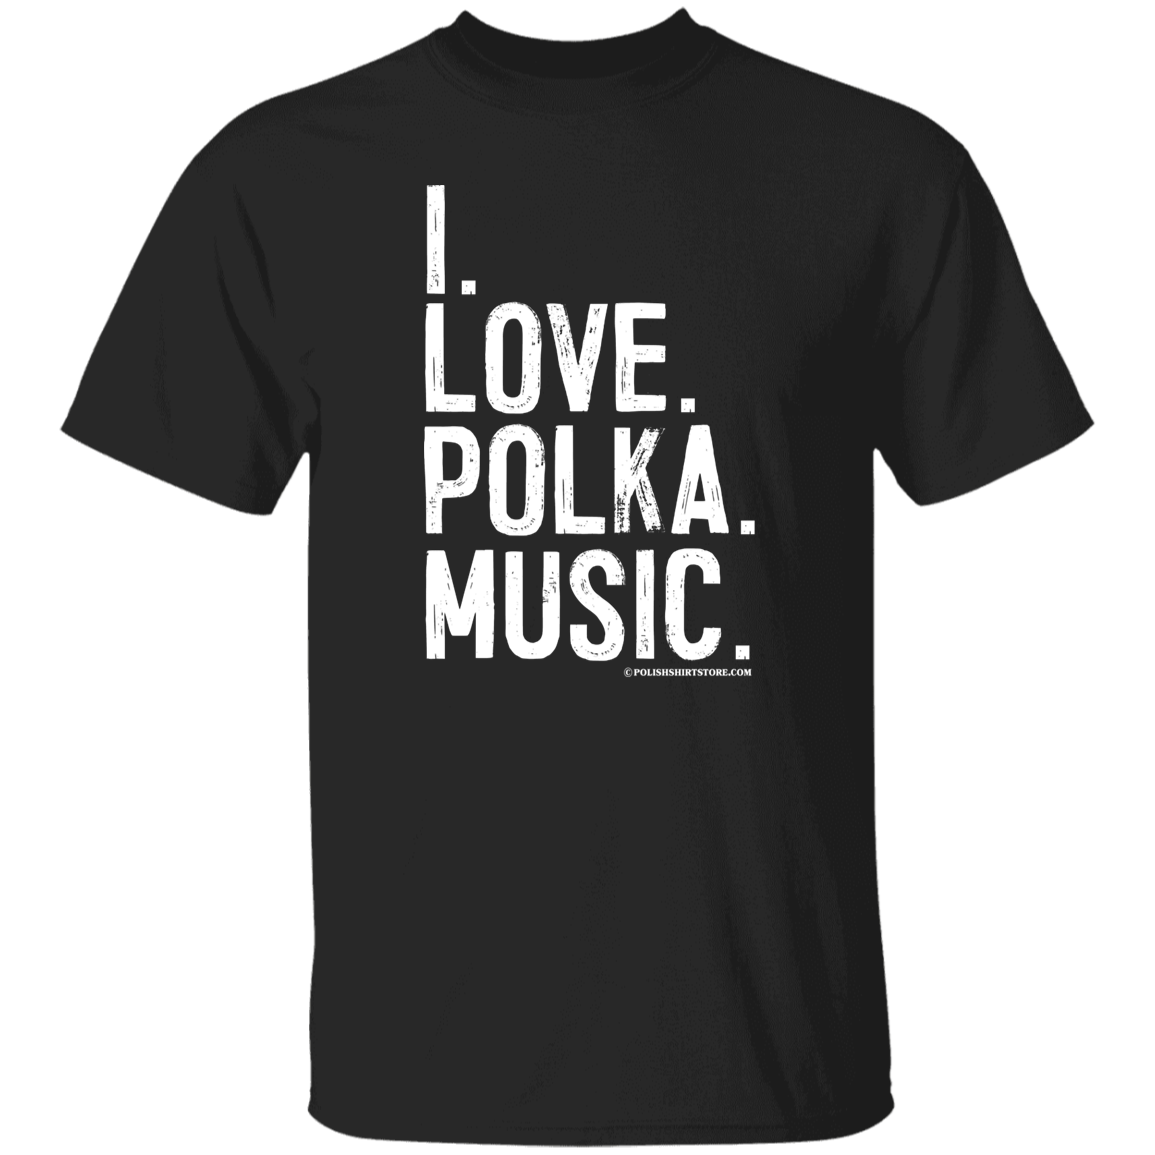 I Love Polka Music Apparel CustomCat G500 5.3 oz. T-Shirt Black S